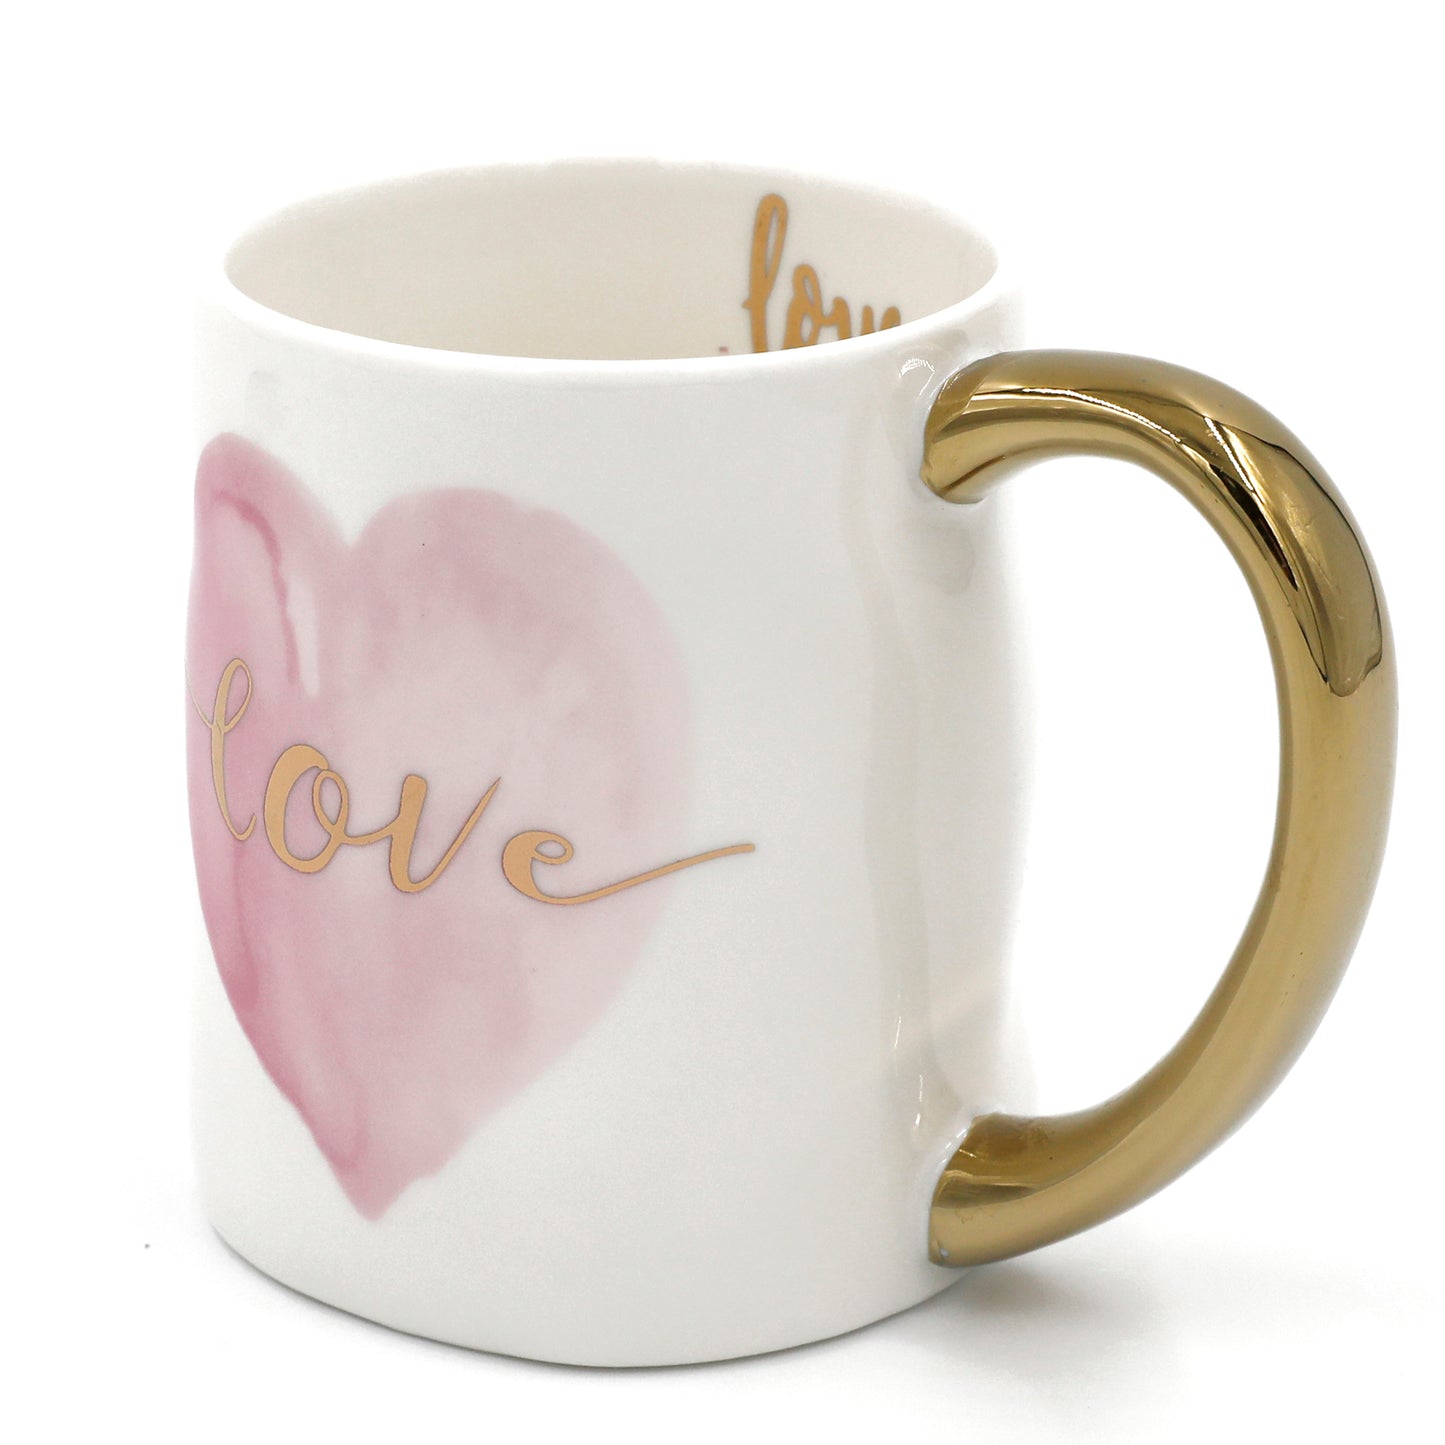 13.5 oz Stoneware Ceramic Mug With Sayings,"Love"